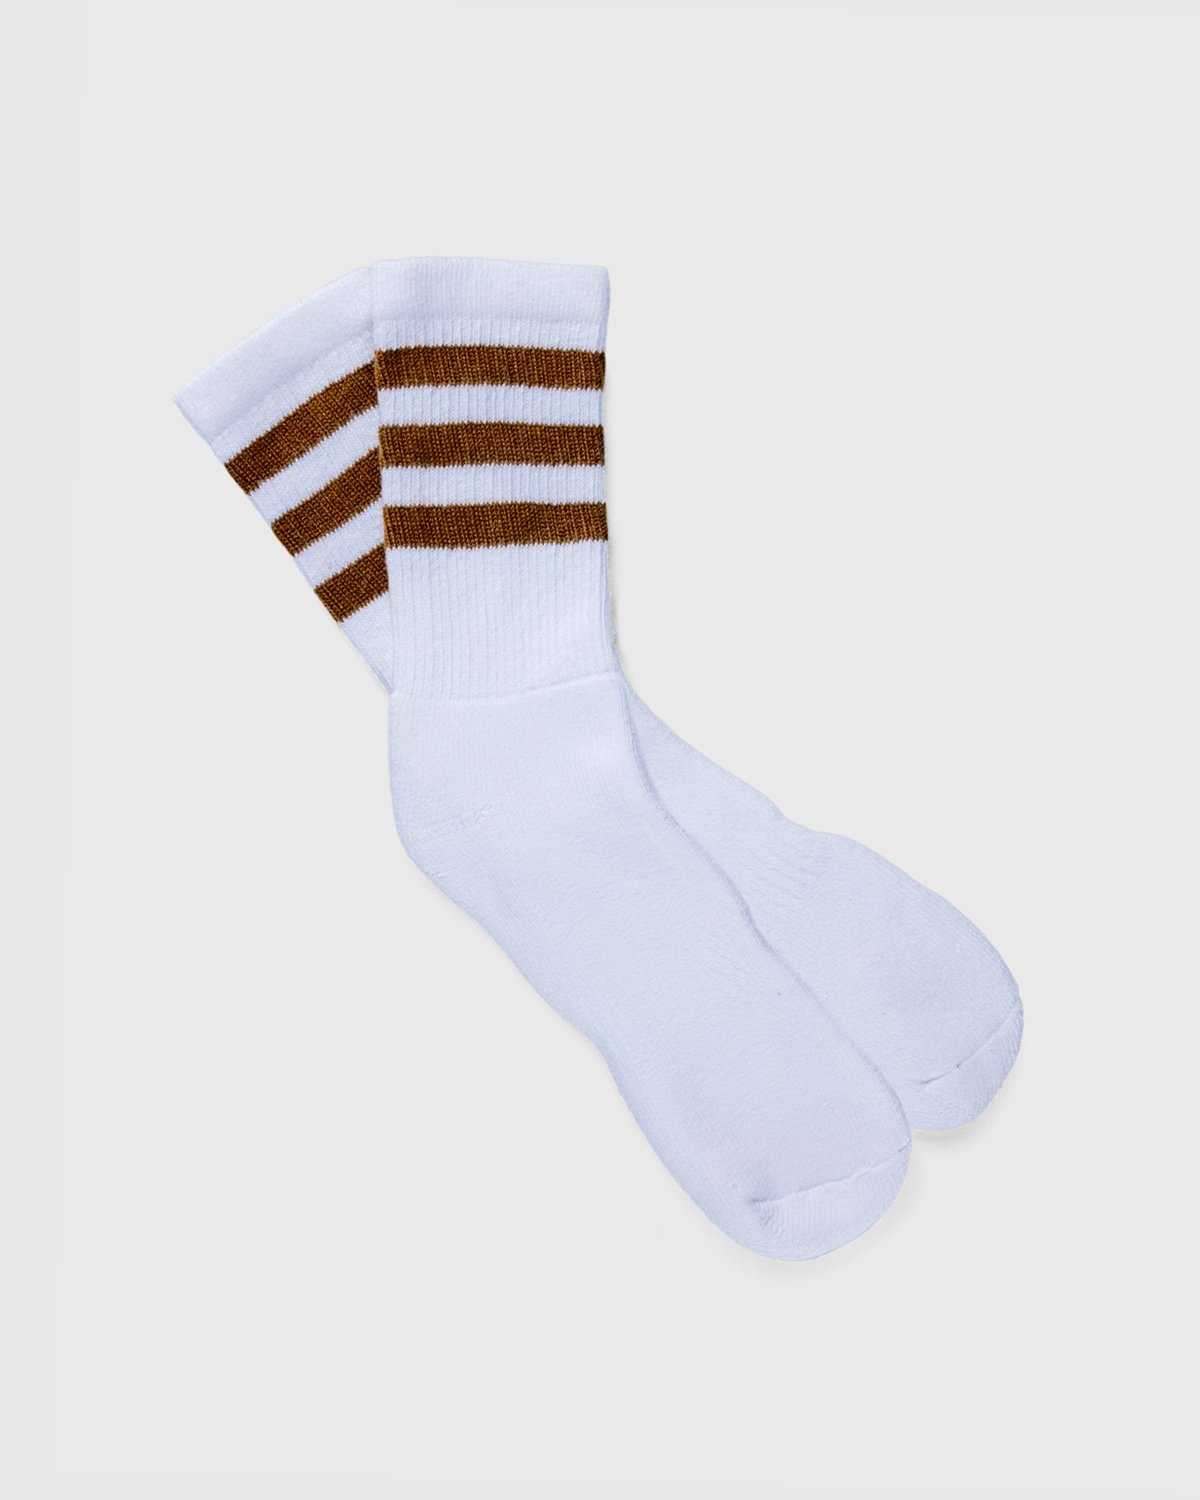 Darryl Brown – Sock Set Multicolour - Socks - Multi - Image 4